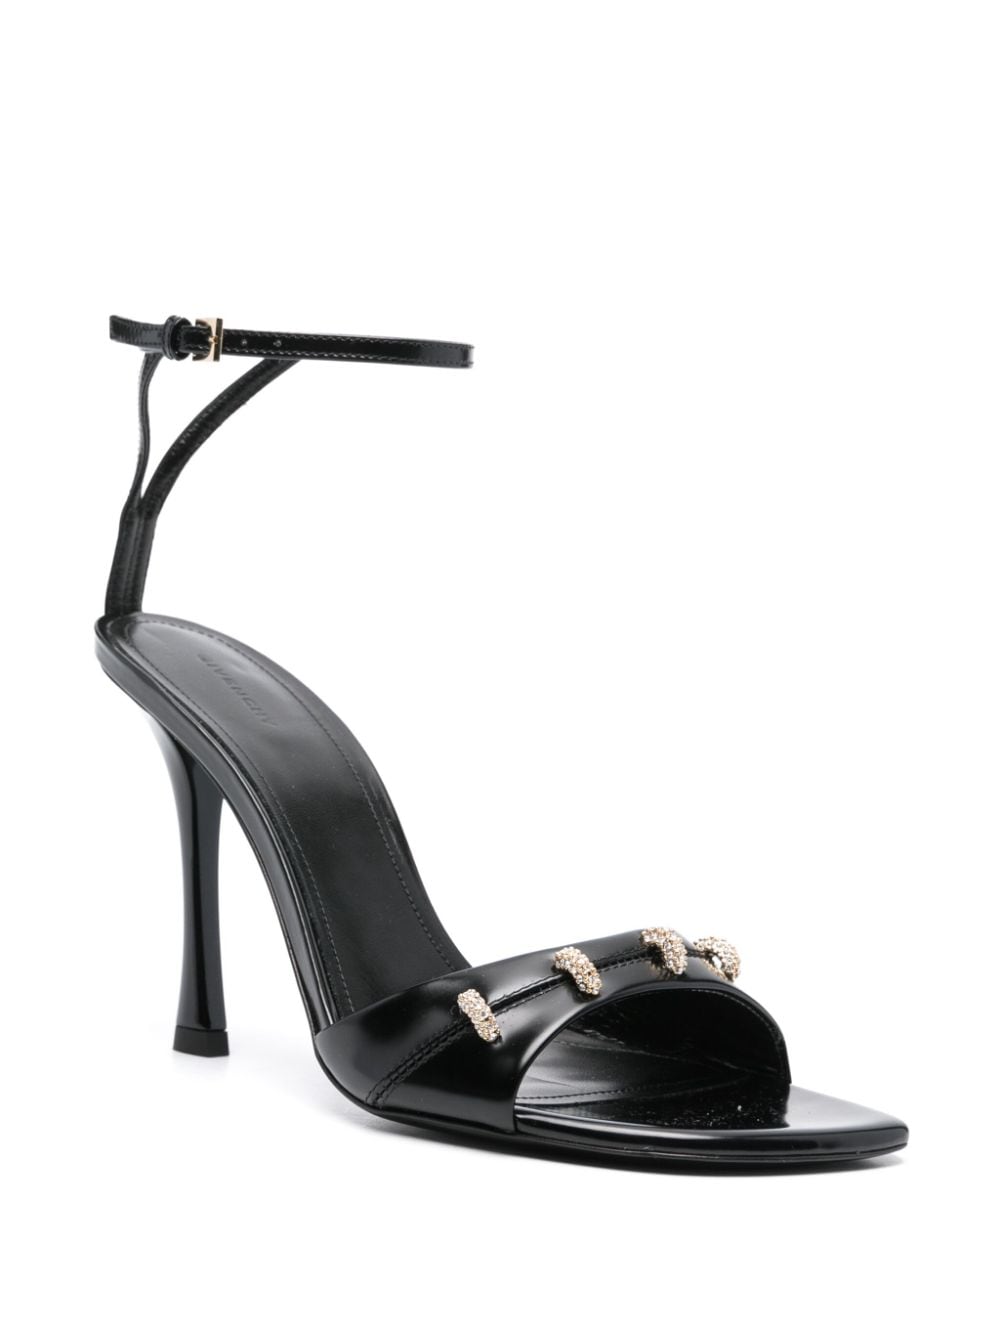 Givenchy Sandals Black